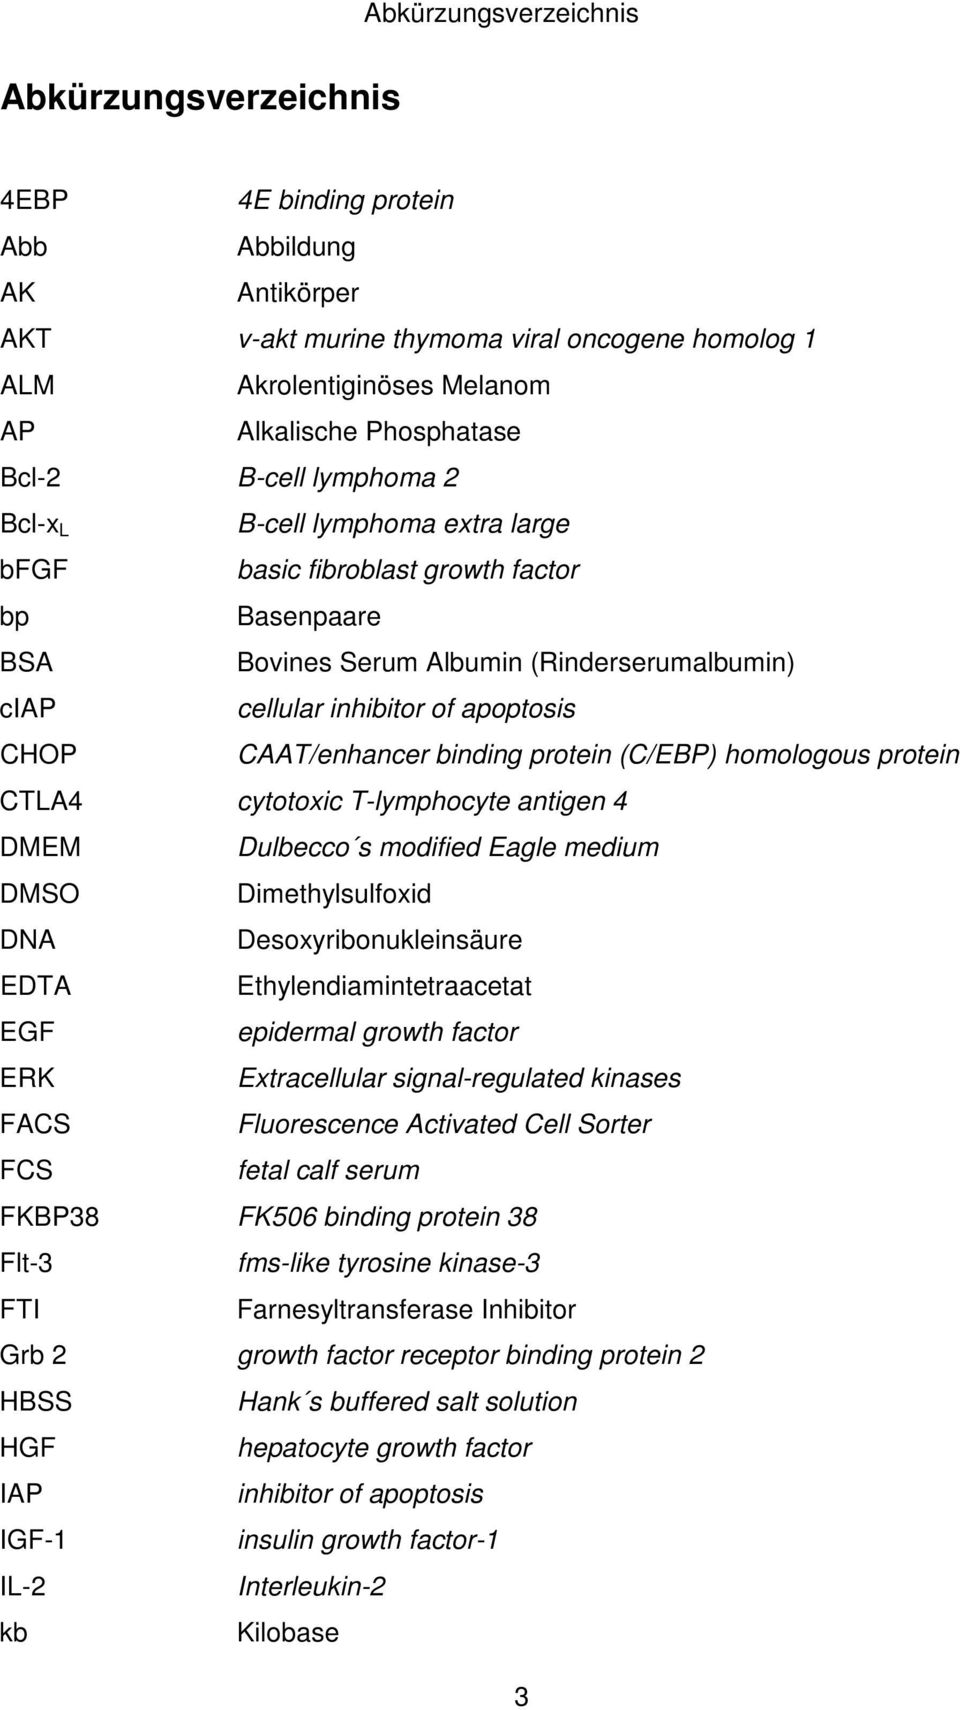 apoptosis CHOP CAAT/enhancer binding protein (C/EBP) homologous protein CTLA4 cytotoxic T-lymphocyte antigen 4 DMEM Dulbecco s modified Eagle medium DMSO Dimethylsulfoxid DNA Desoxyribonukleinsäure